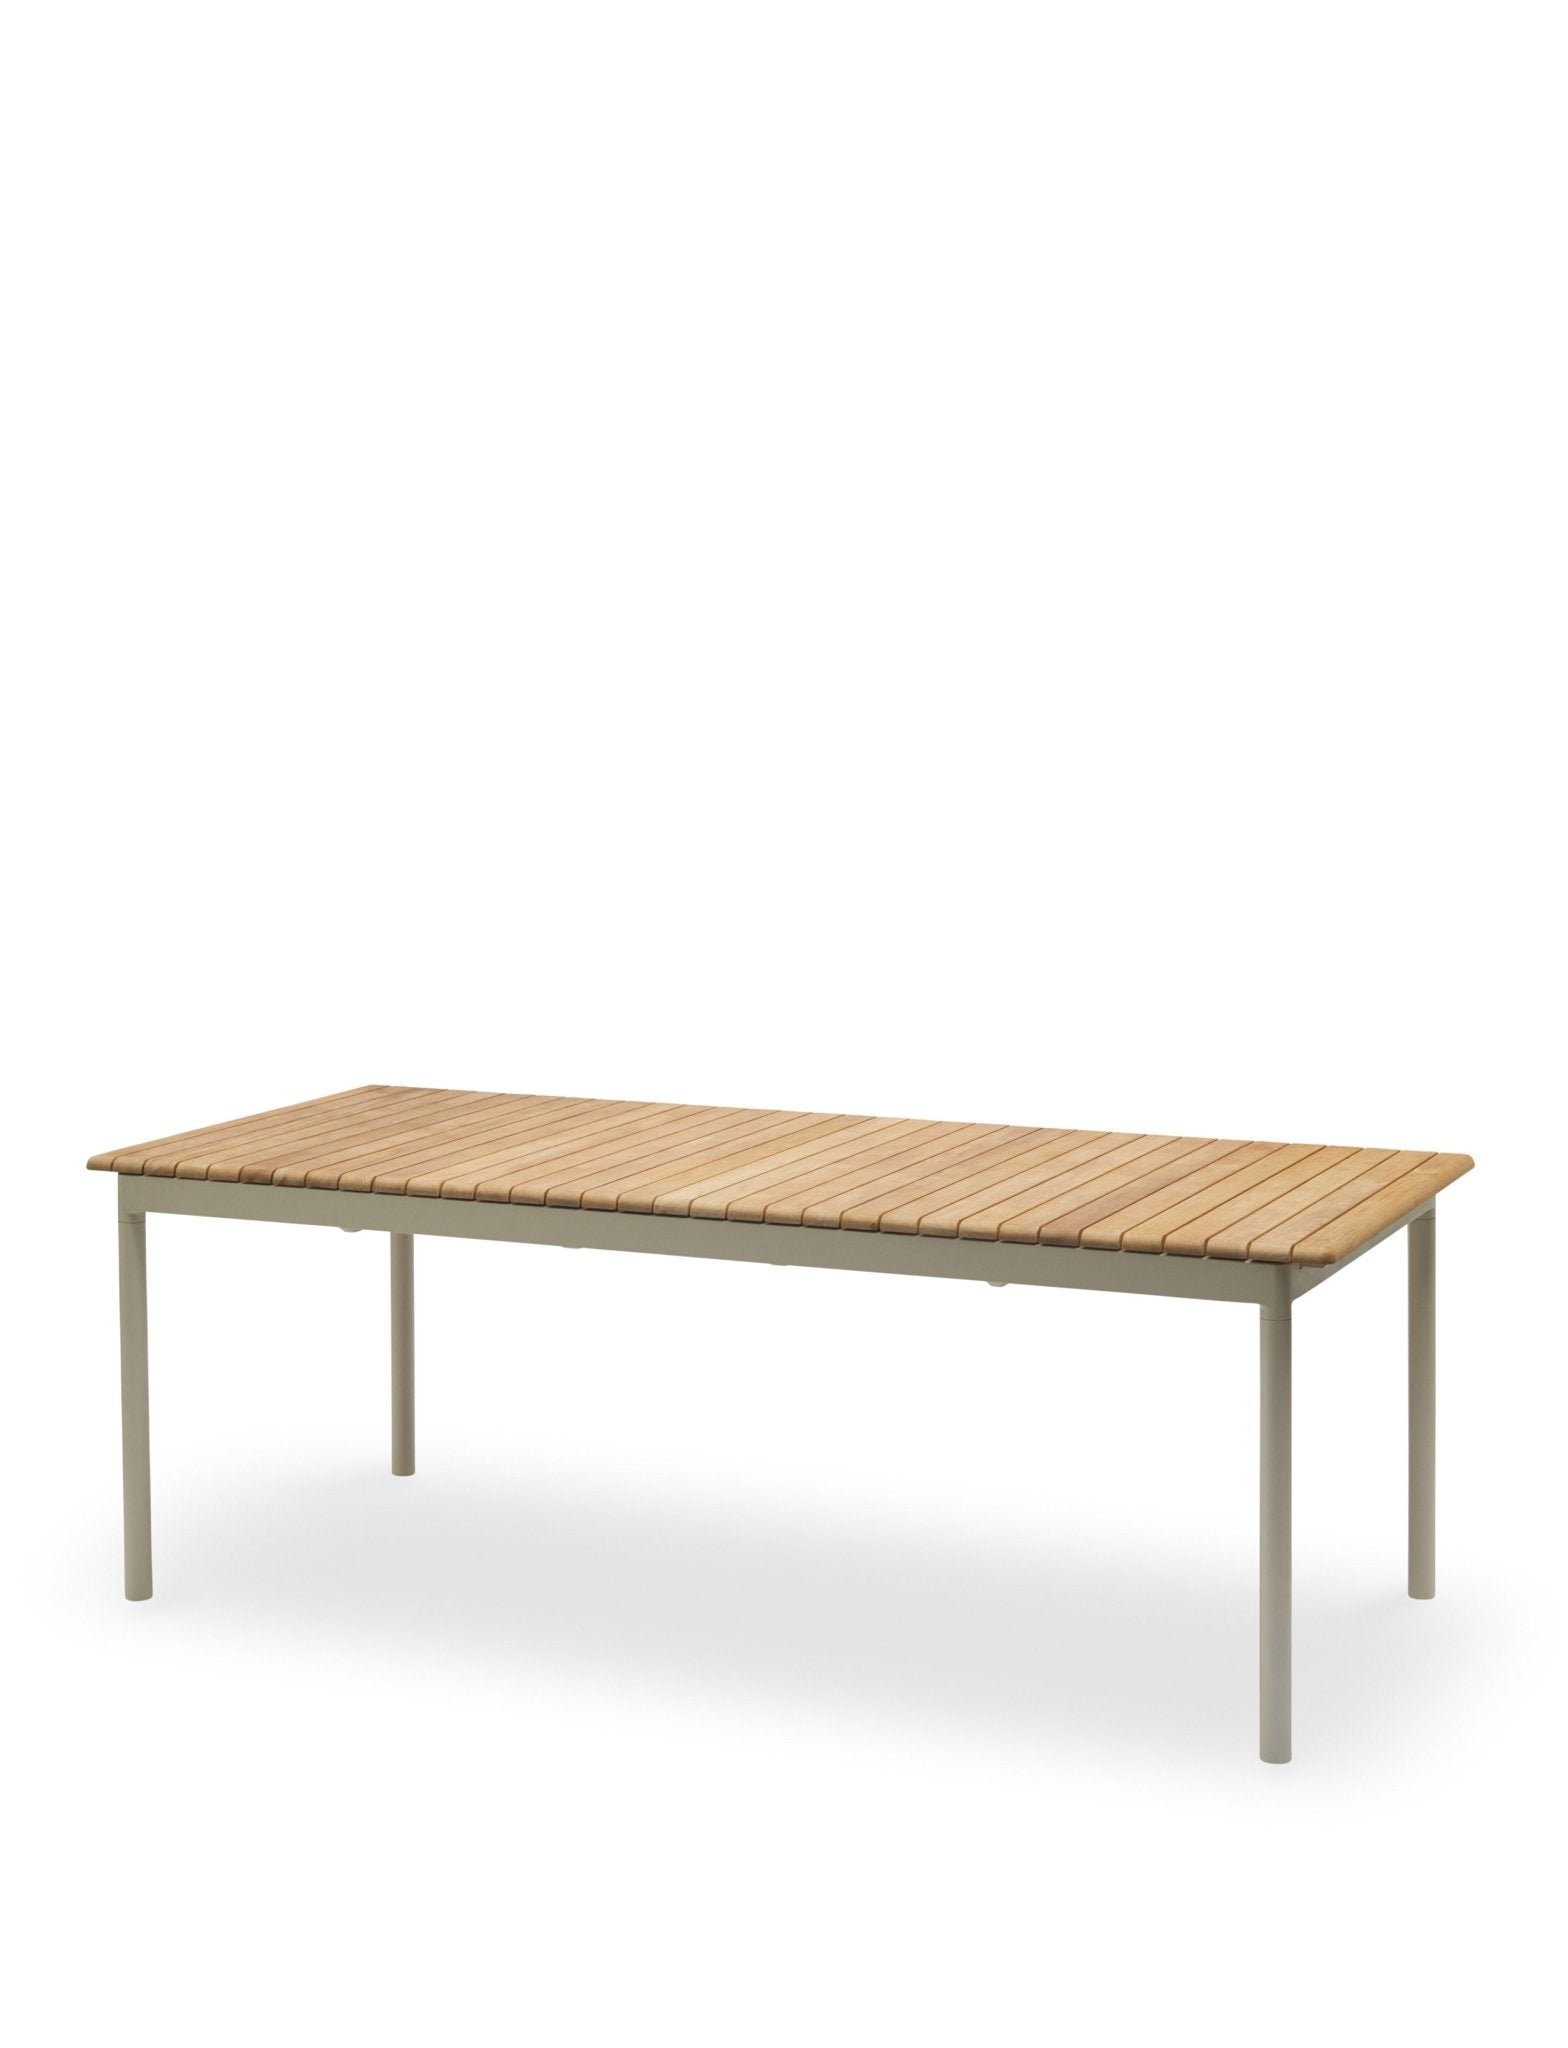 Pelago Table - Light Ivory / No Extension Plate